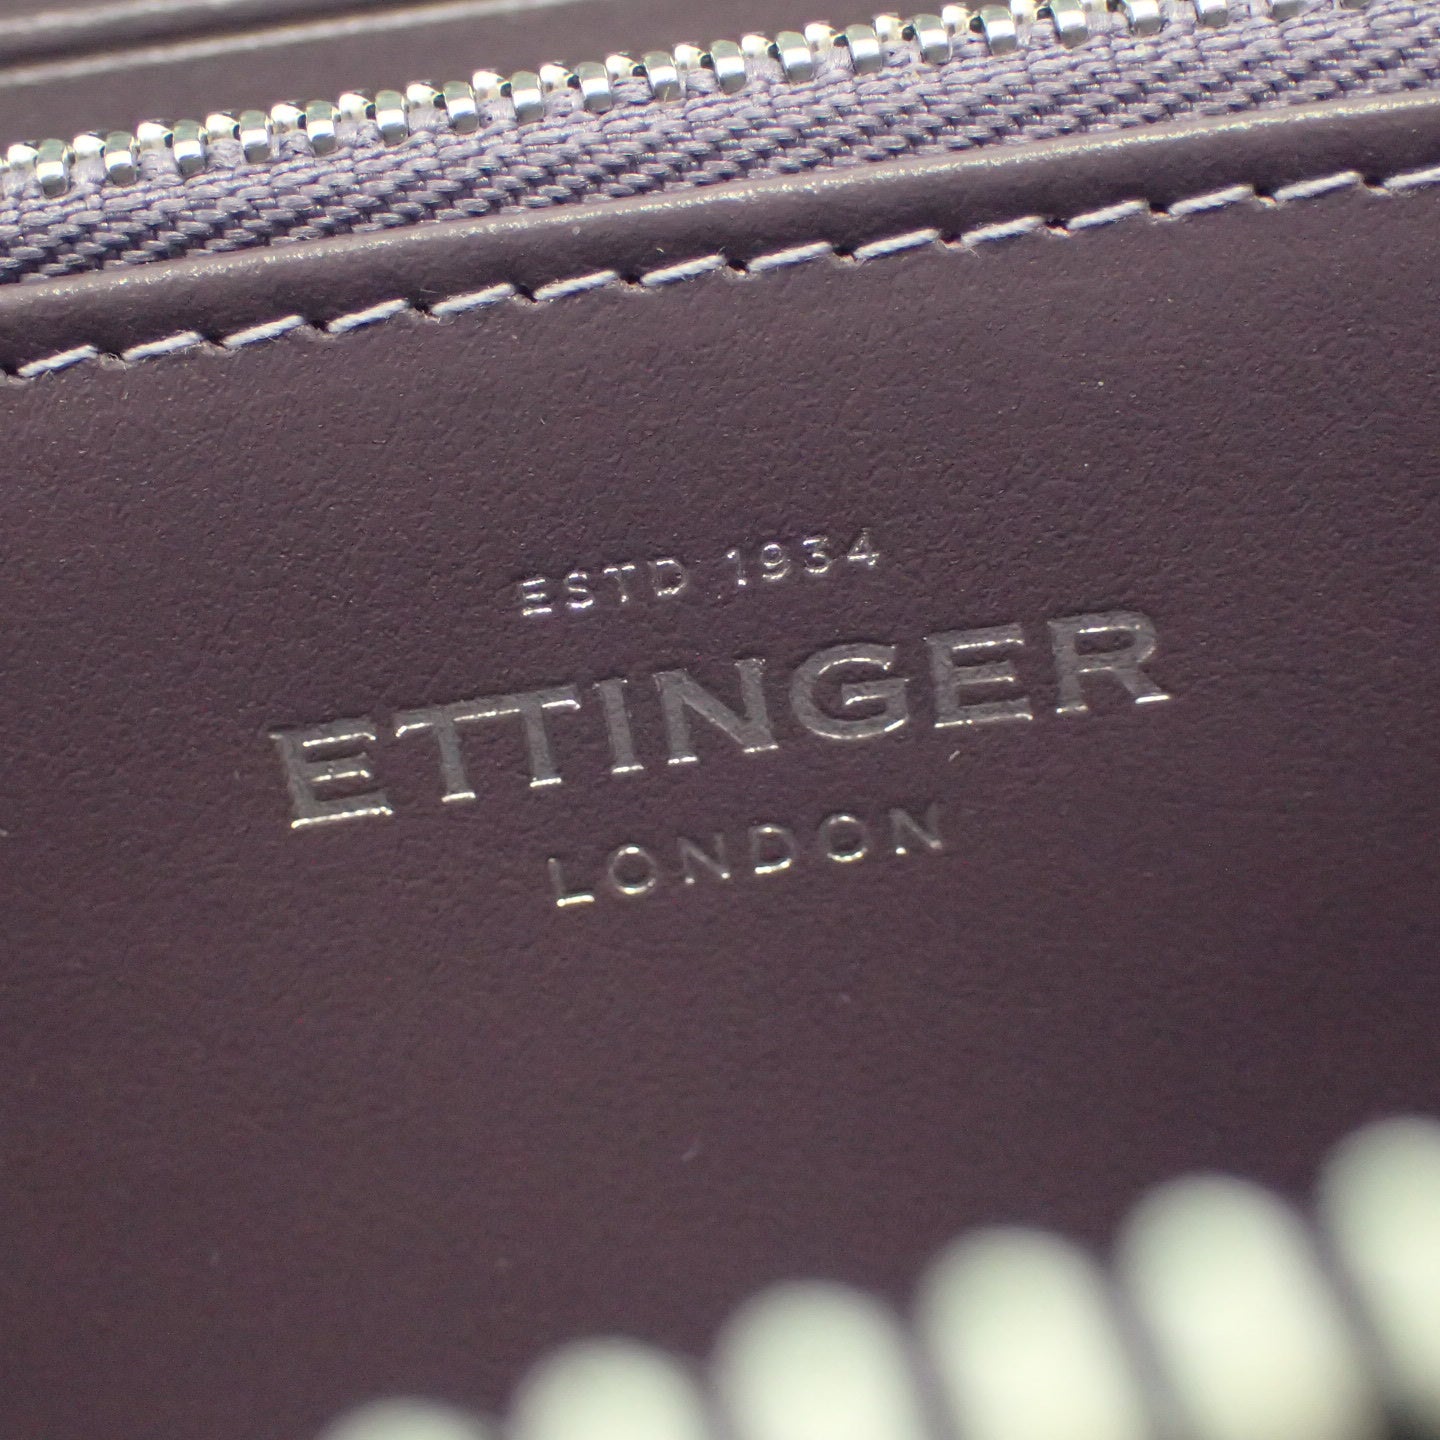 Ettinger 长钱包圆形拉链皮革黑色 x 紫色带盒子 ETTINGER [AFI18] [二手] 